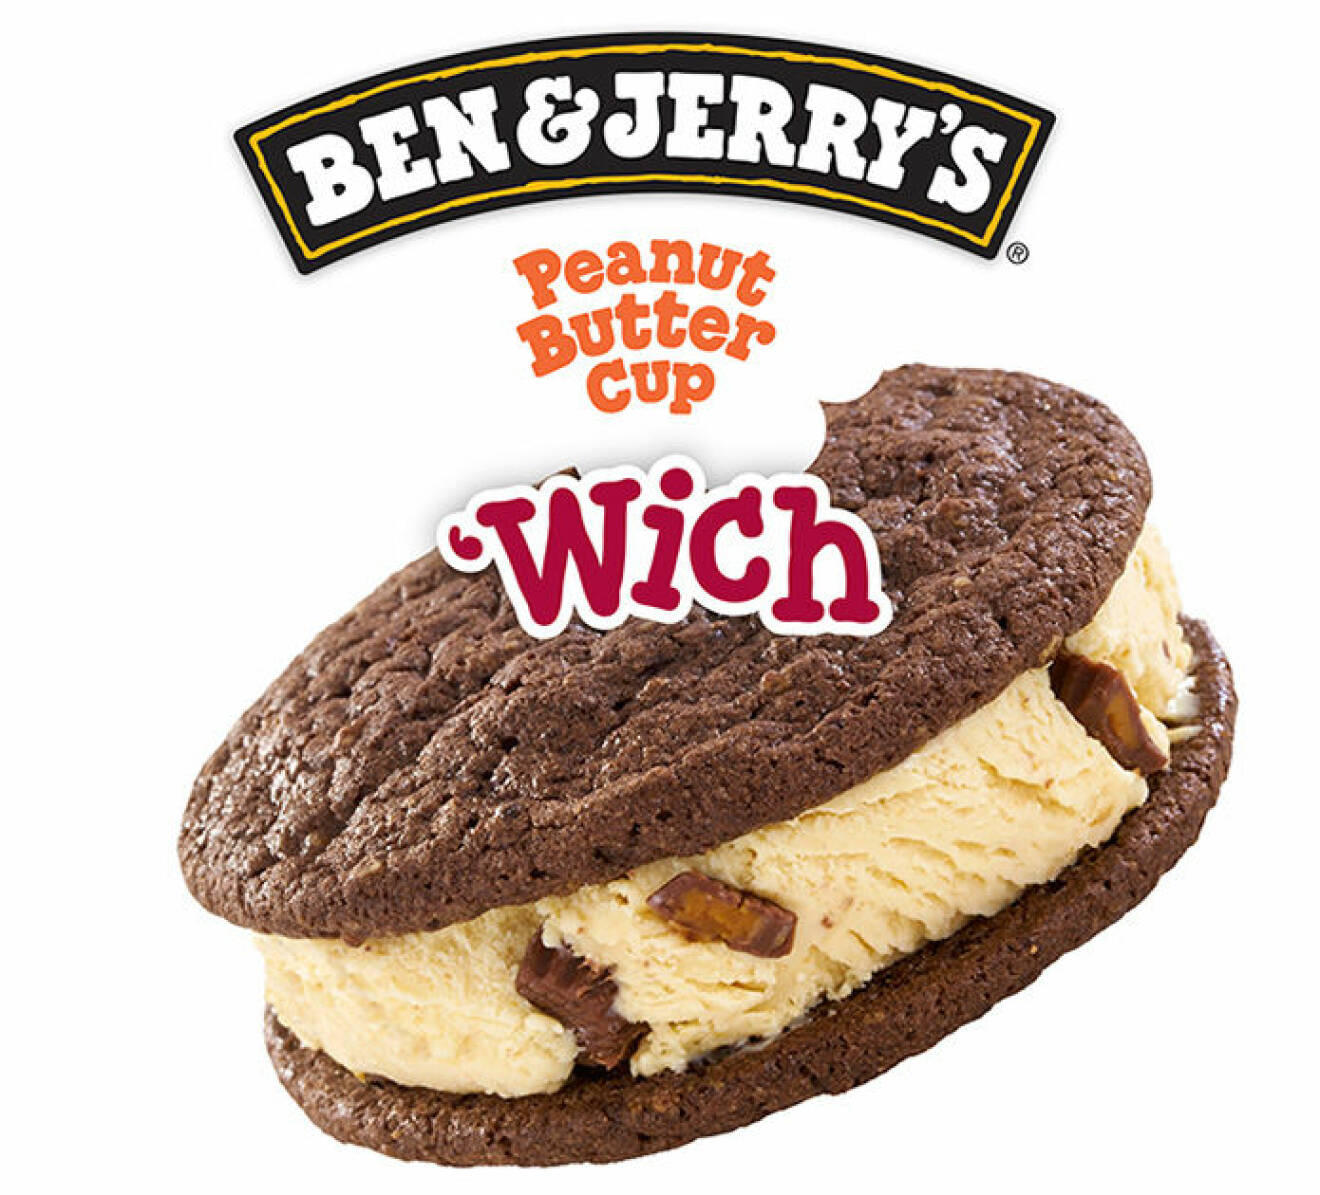 Ben & Jerry's Peanut Butter Cup 'Wich